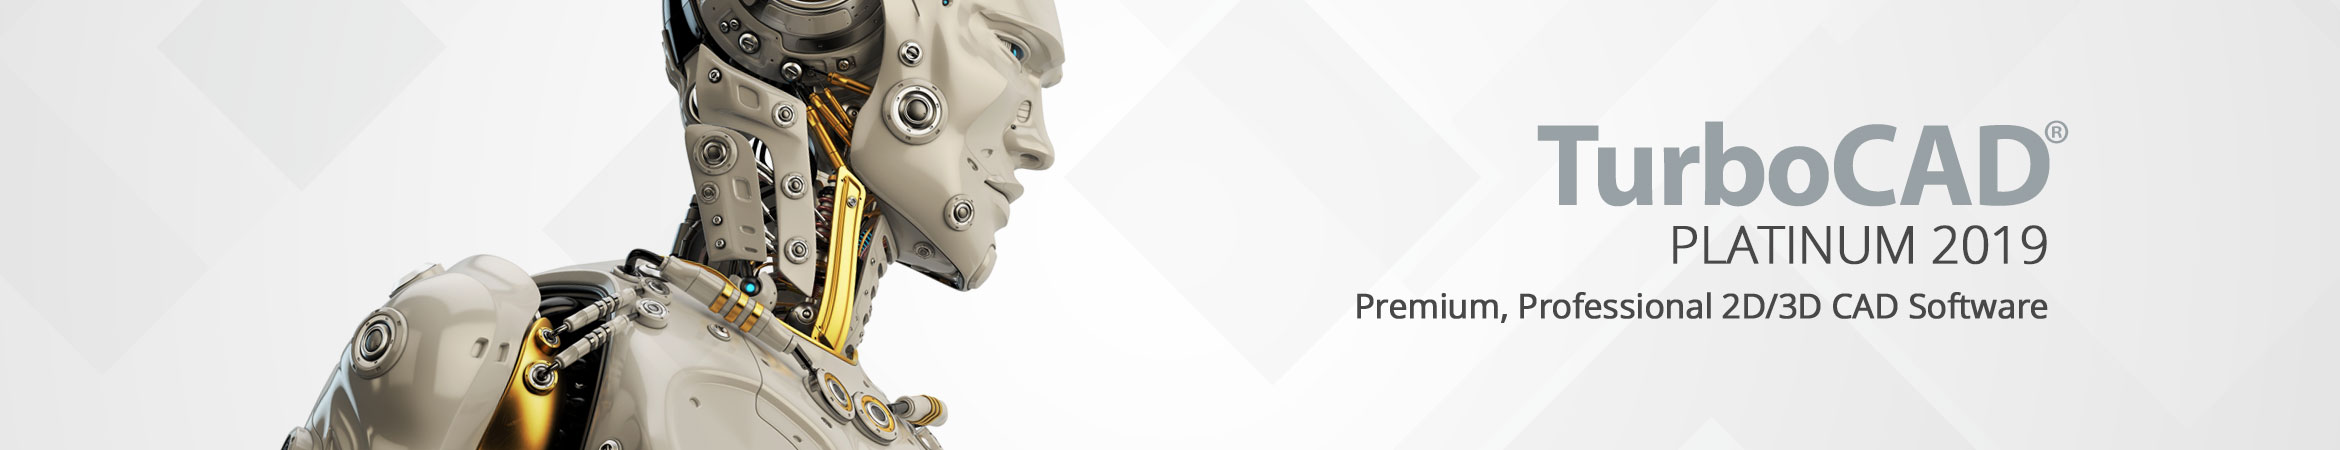 TurboCAD Pro Platinum 2017 - Premium, Professional 2D/3D CAD Software